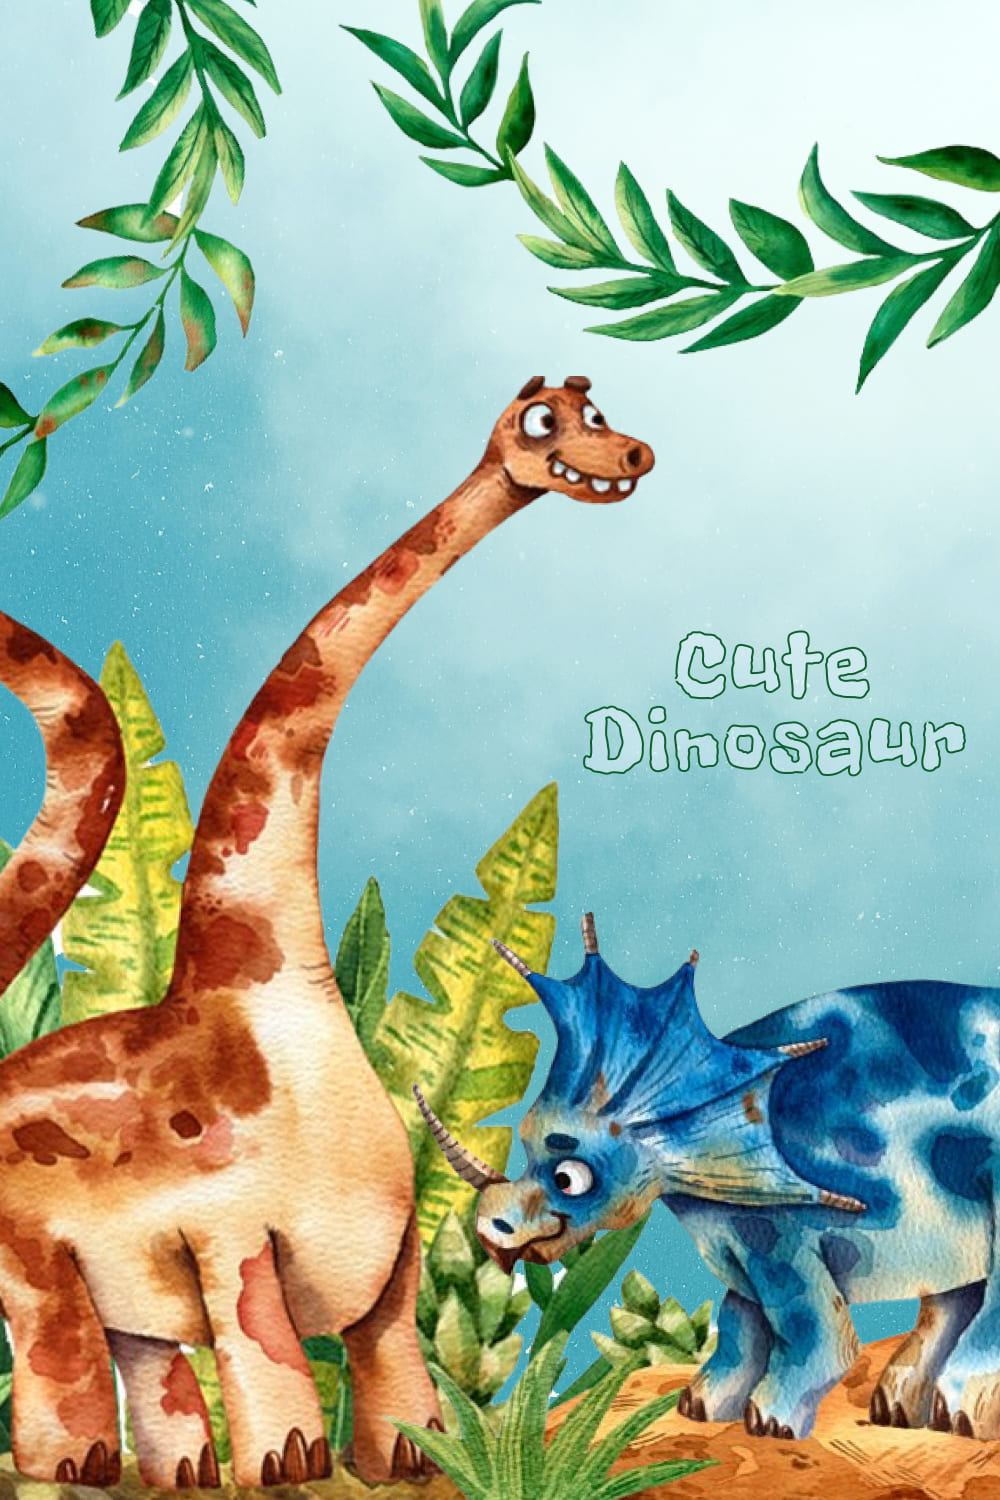 Cute Dinosaurs - Watercolor Clip Art pinterest image.